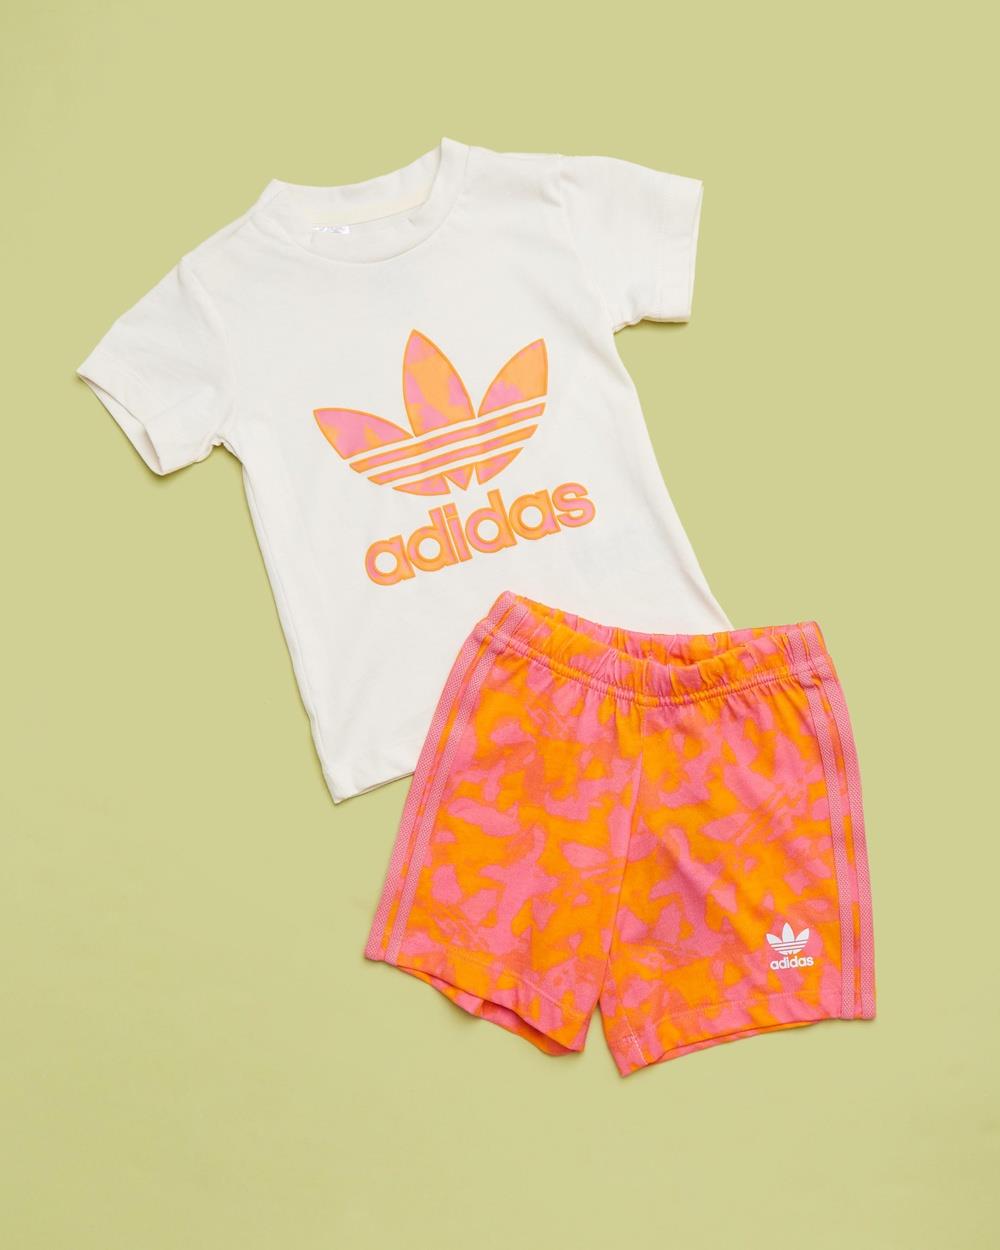 adidas Originals - Shorts and Tee Set Babies Kids - 2 Piece (Bright Orange & Pink Fusion) Shorts and Tee Set - Babies-Kids